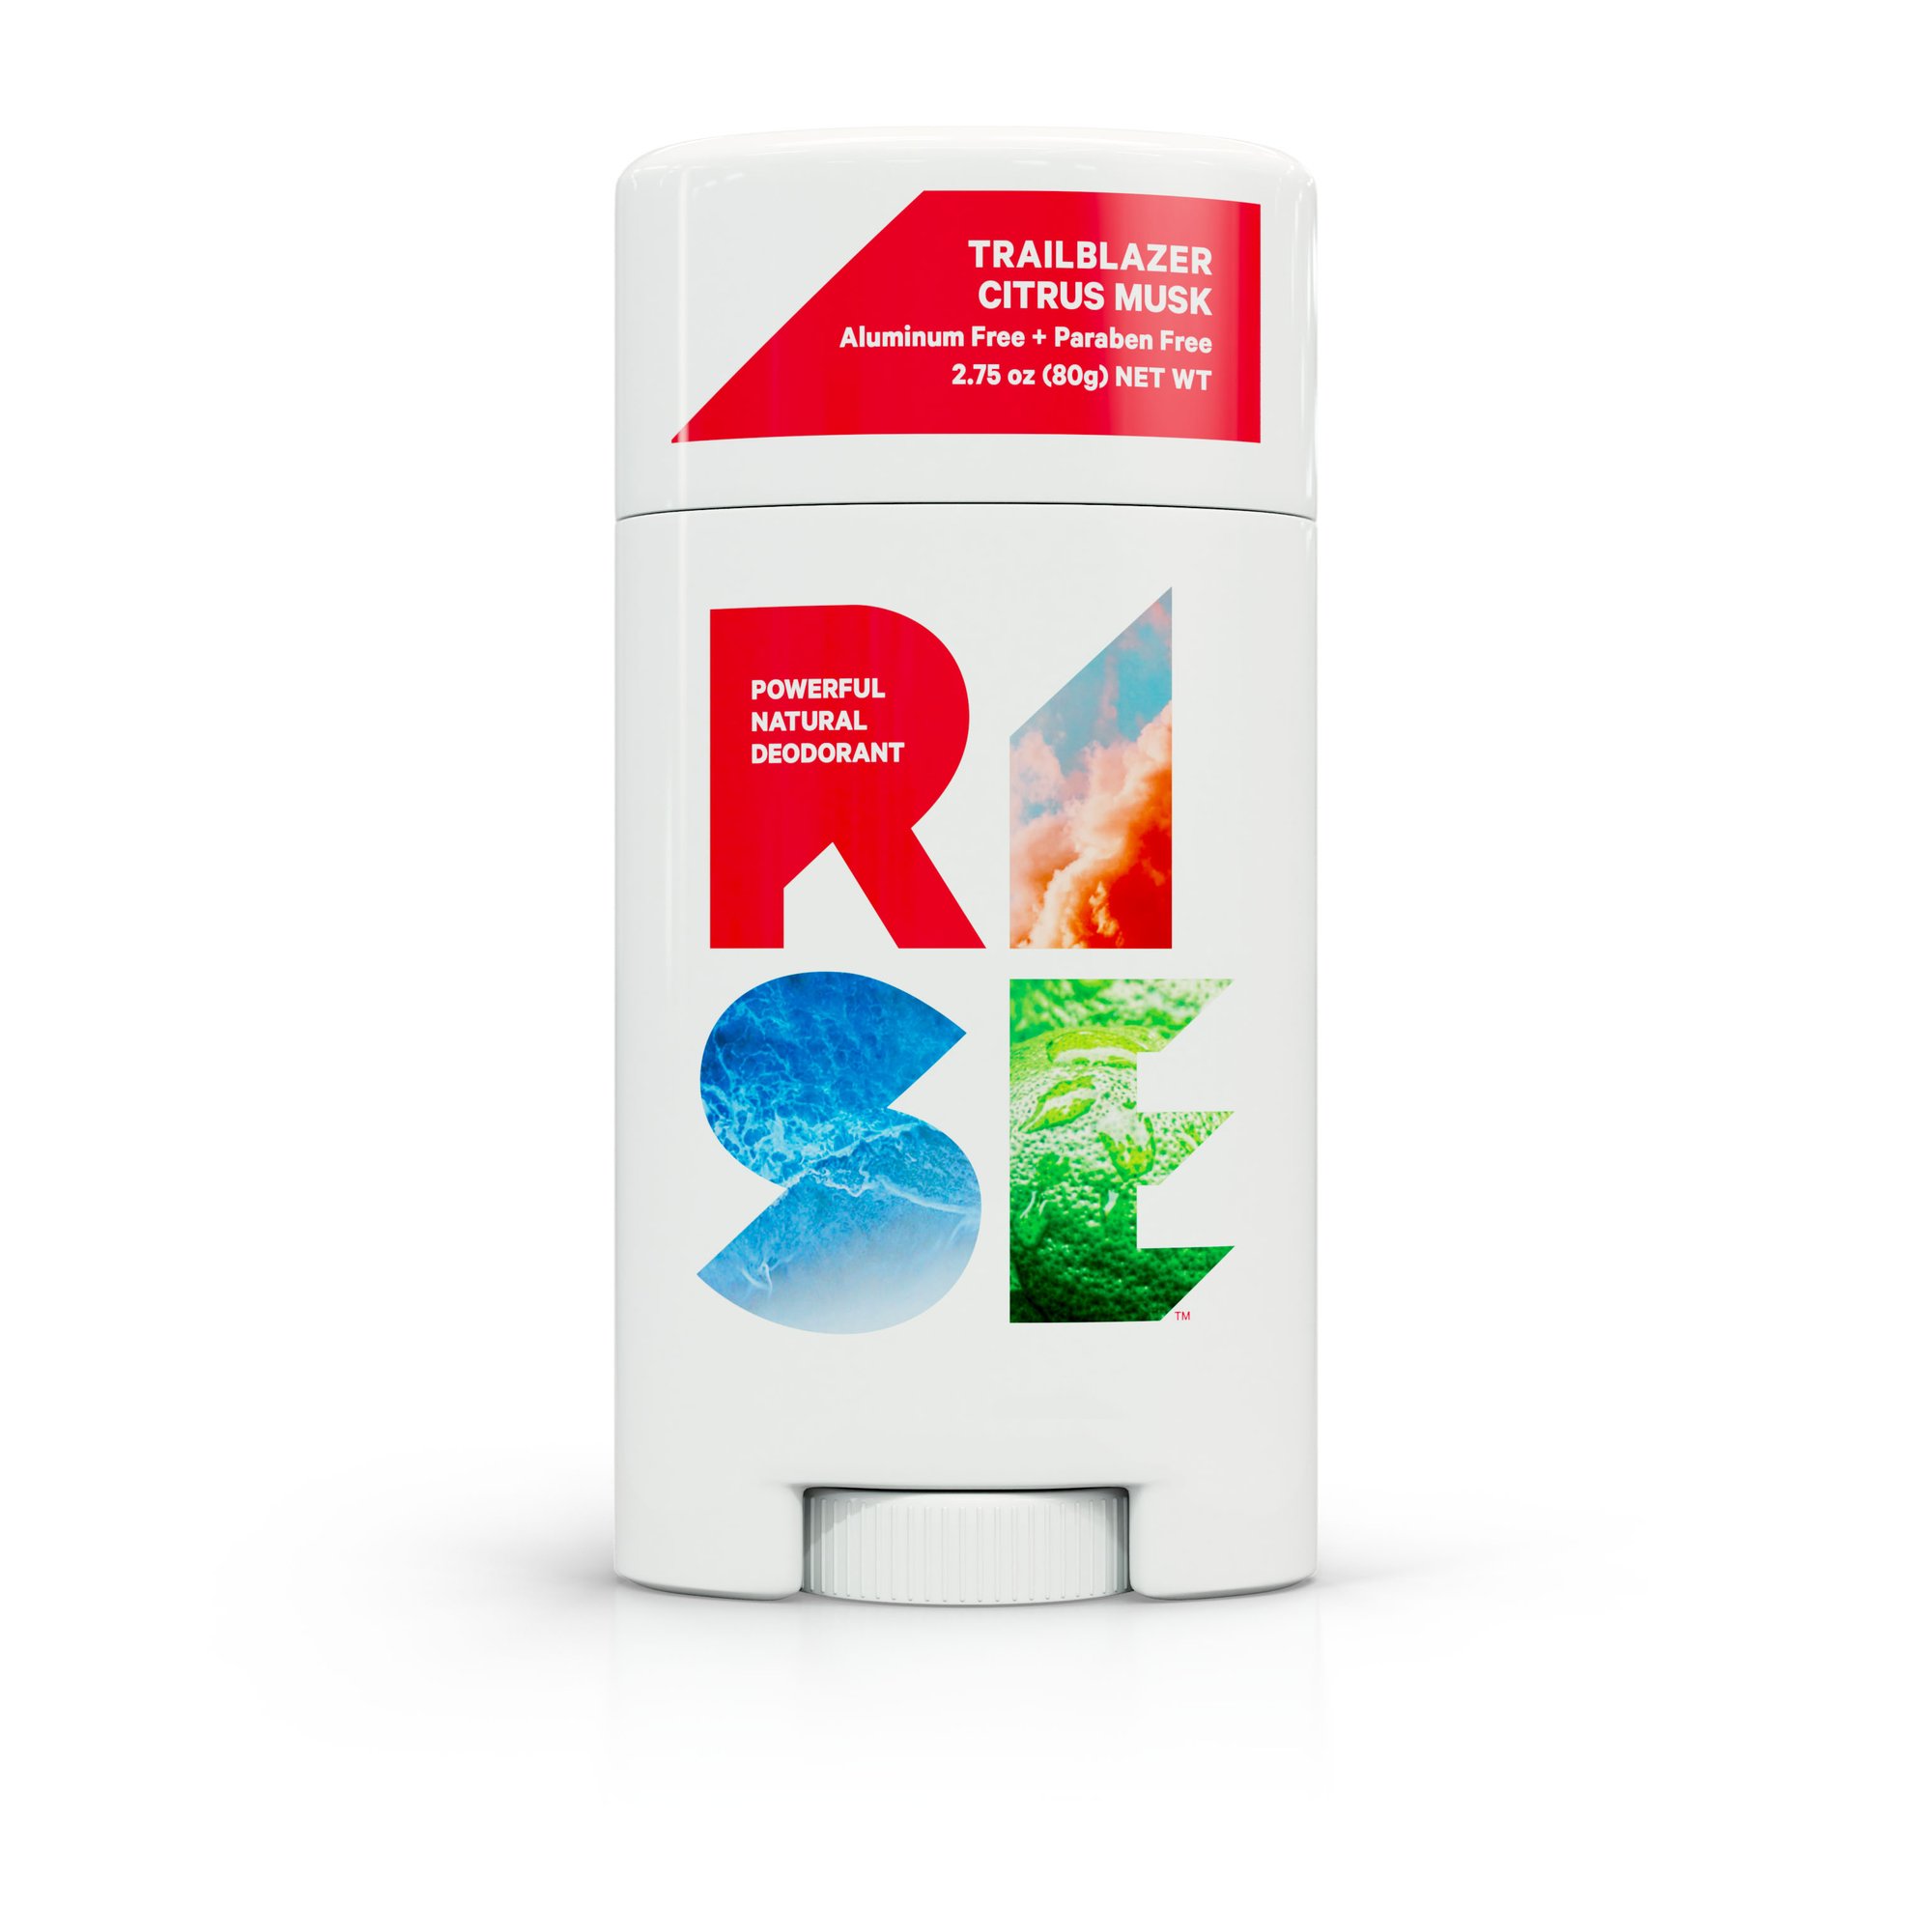 RISE - Powerful, natural deodorant - Trailblazer Citrus Musk